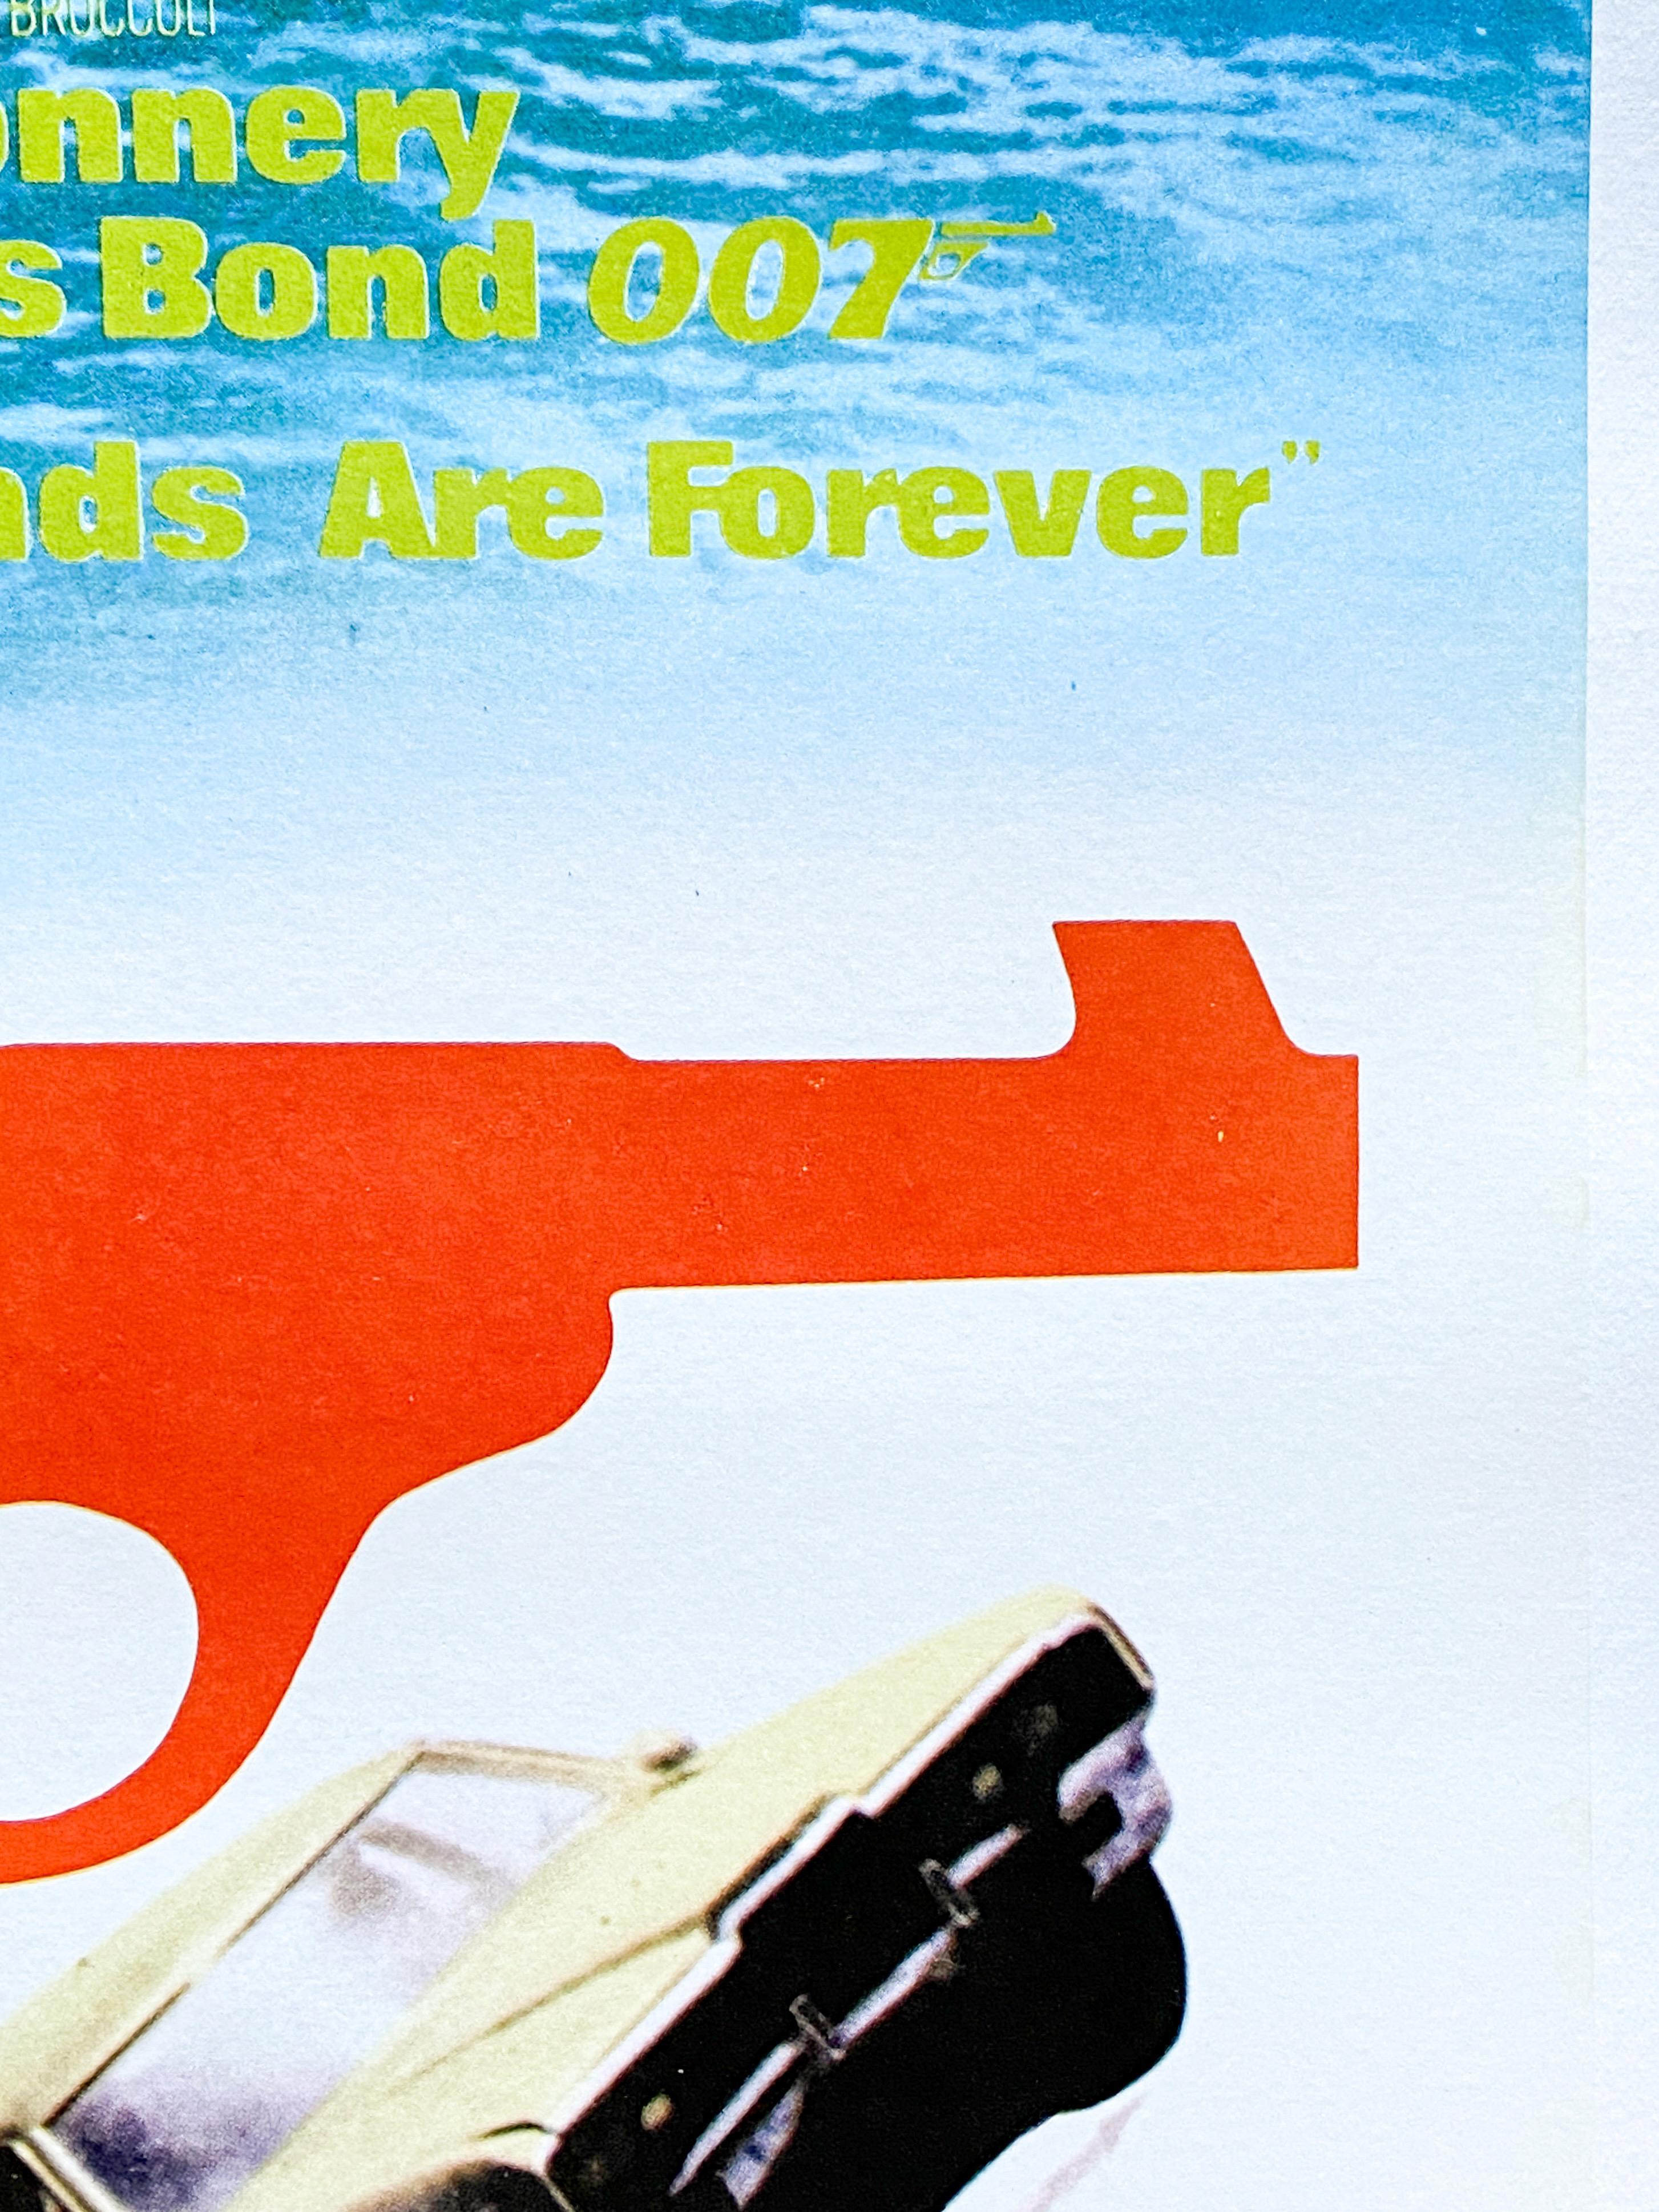 James Bond 'Diamonds Are Forever' Original Vintage Japanese Movie Poster, 1971 For Sale 9